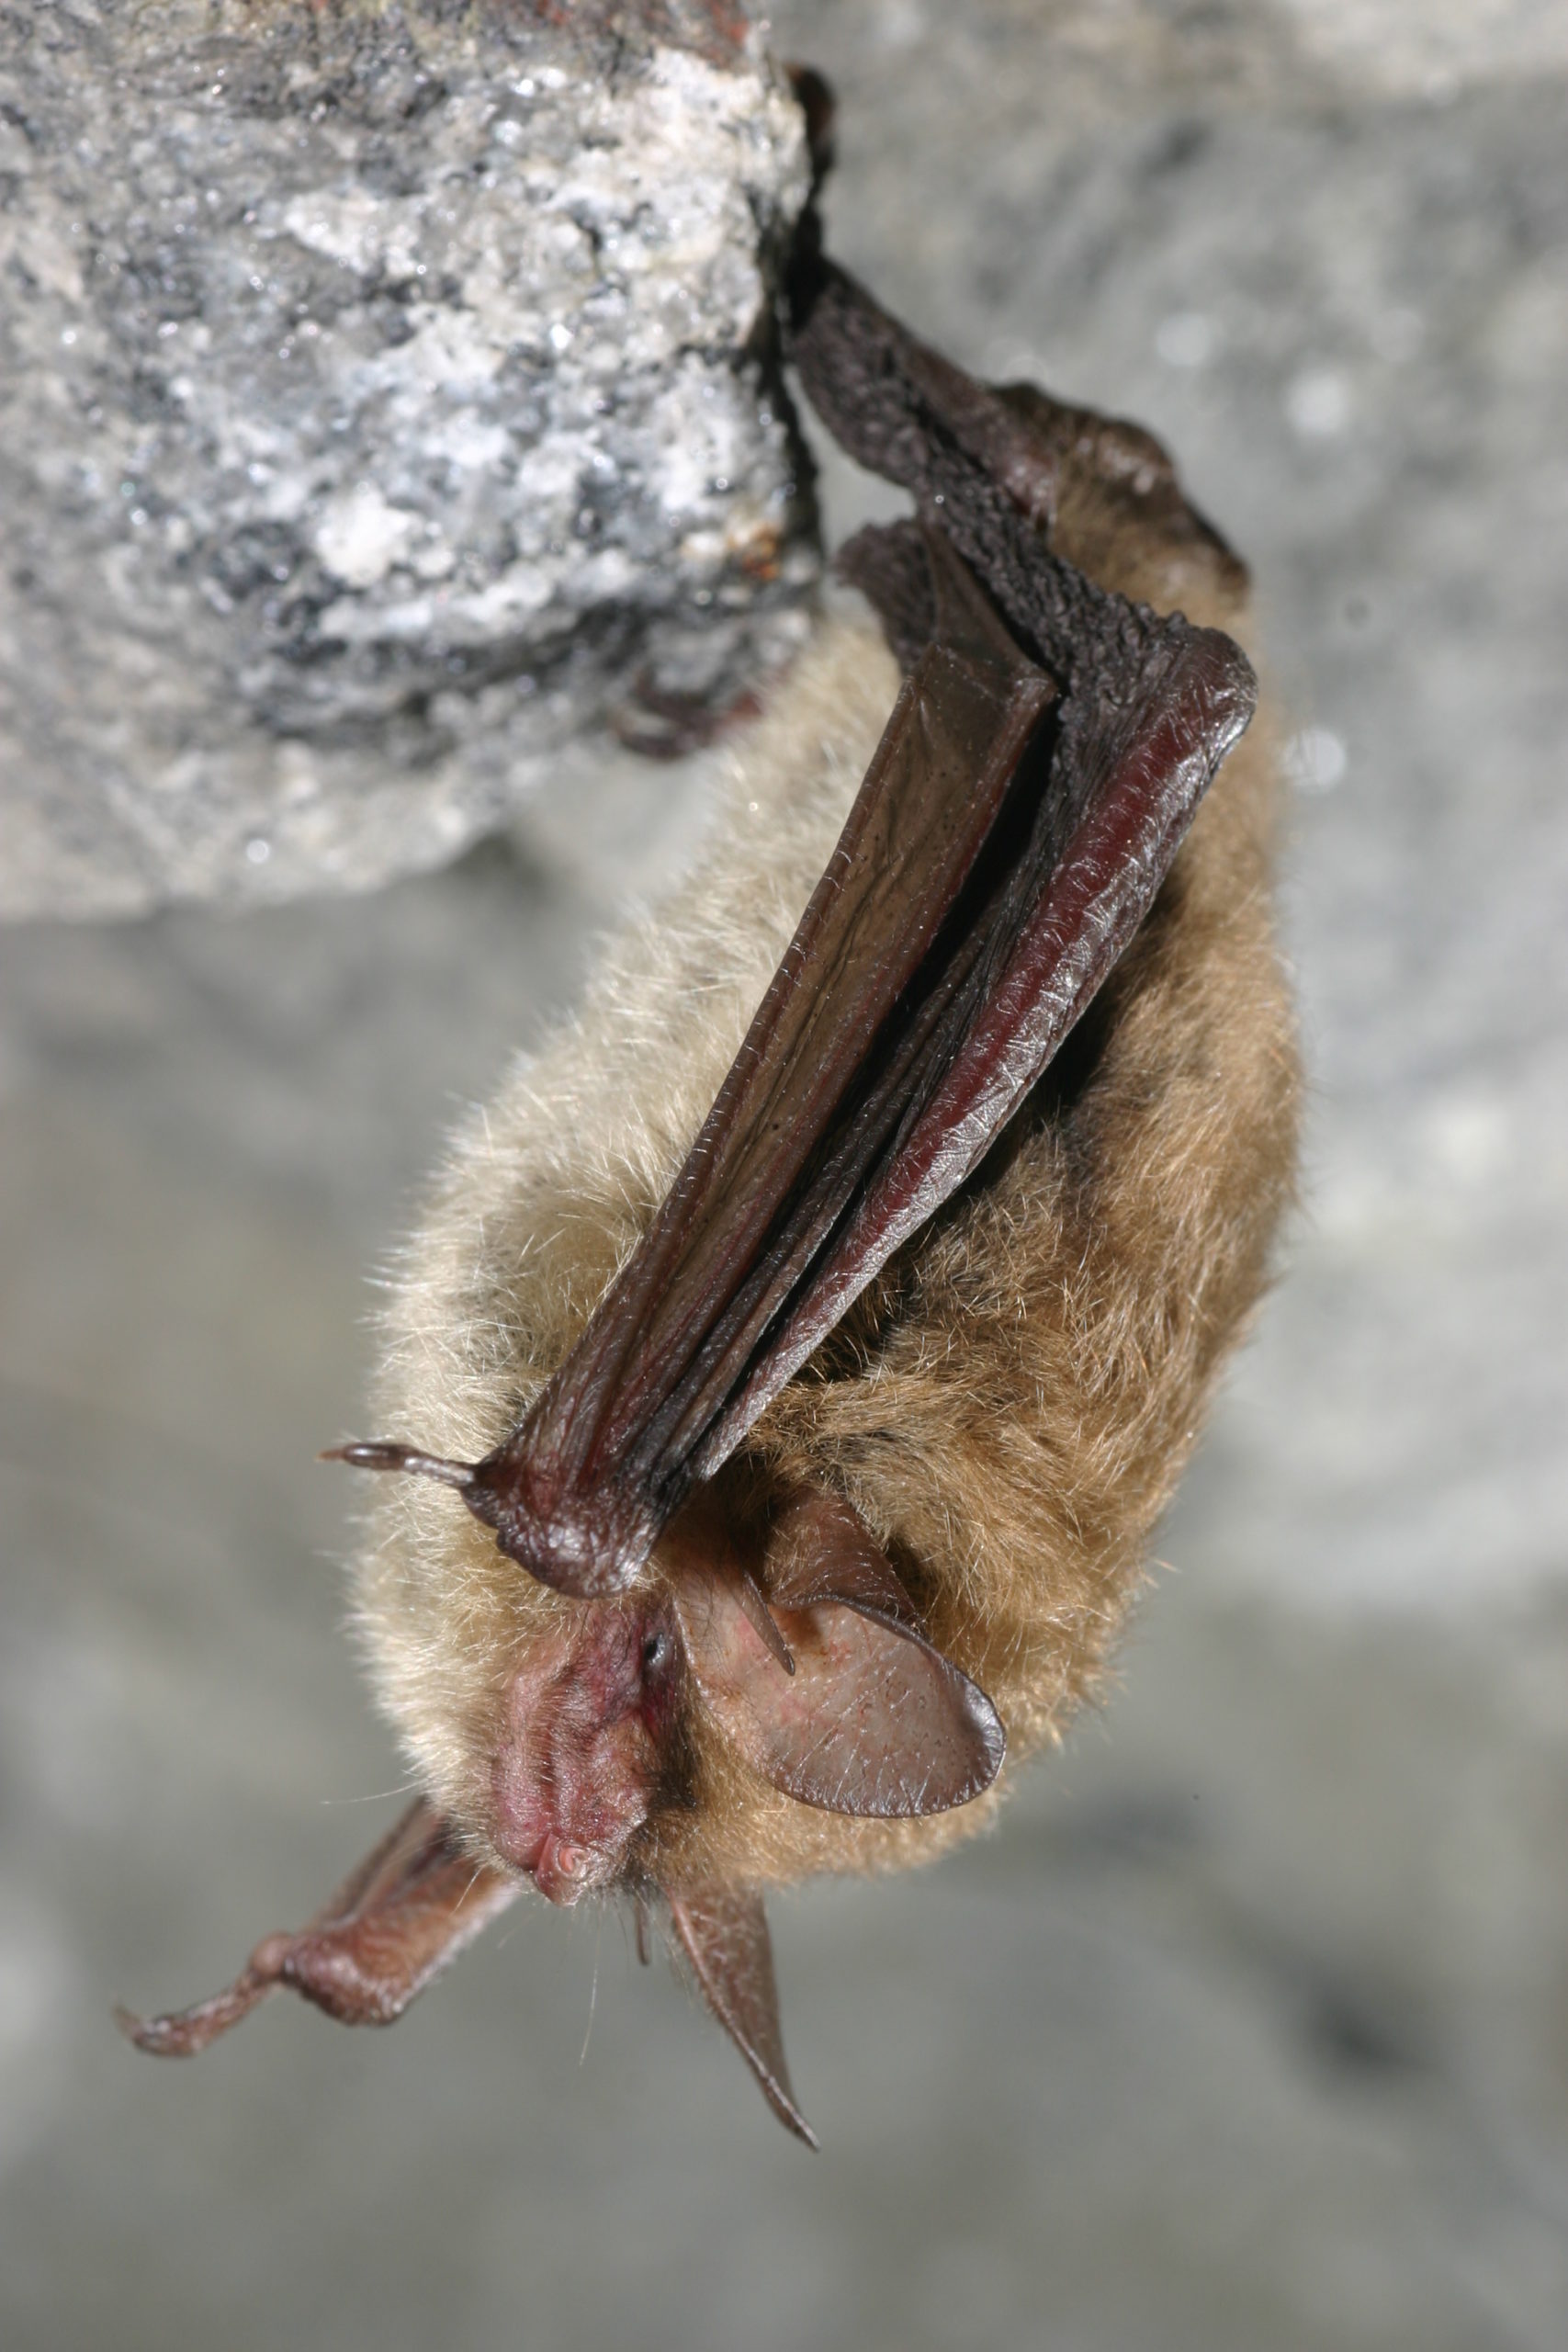 Northern long-eared bat in its hibernation spot.